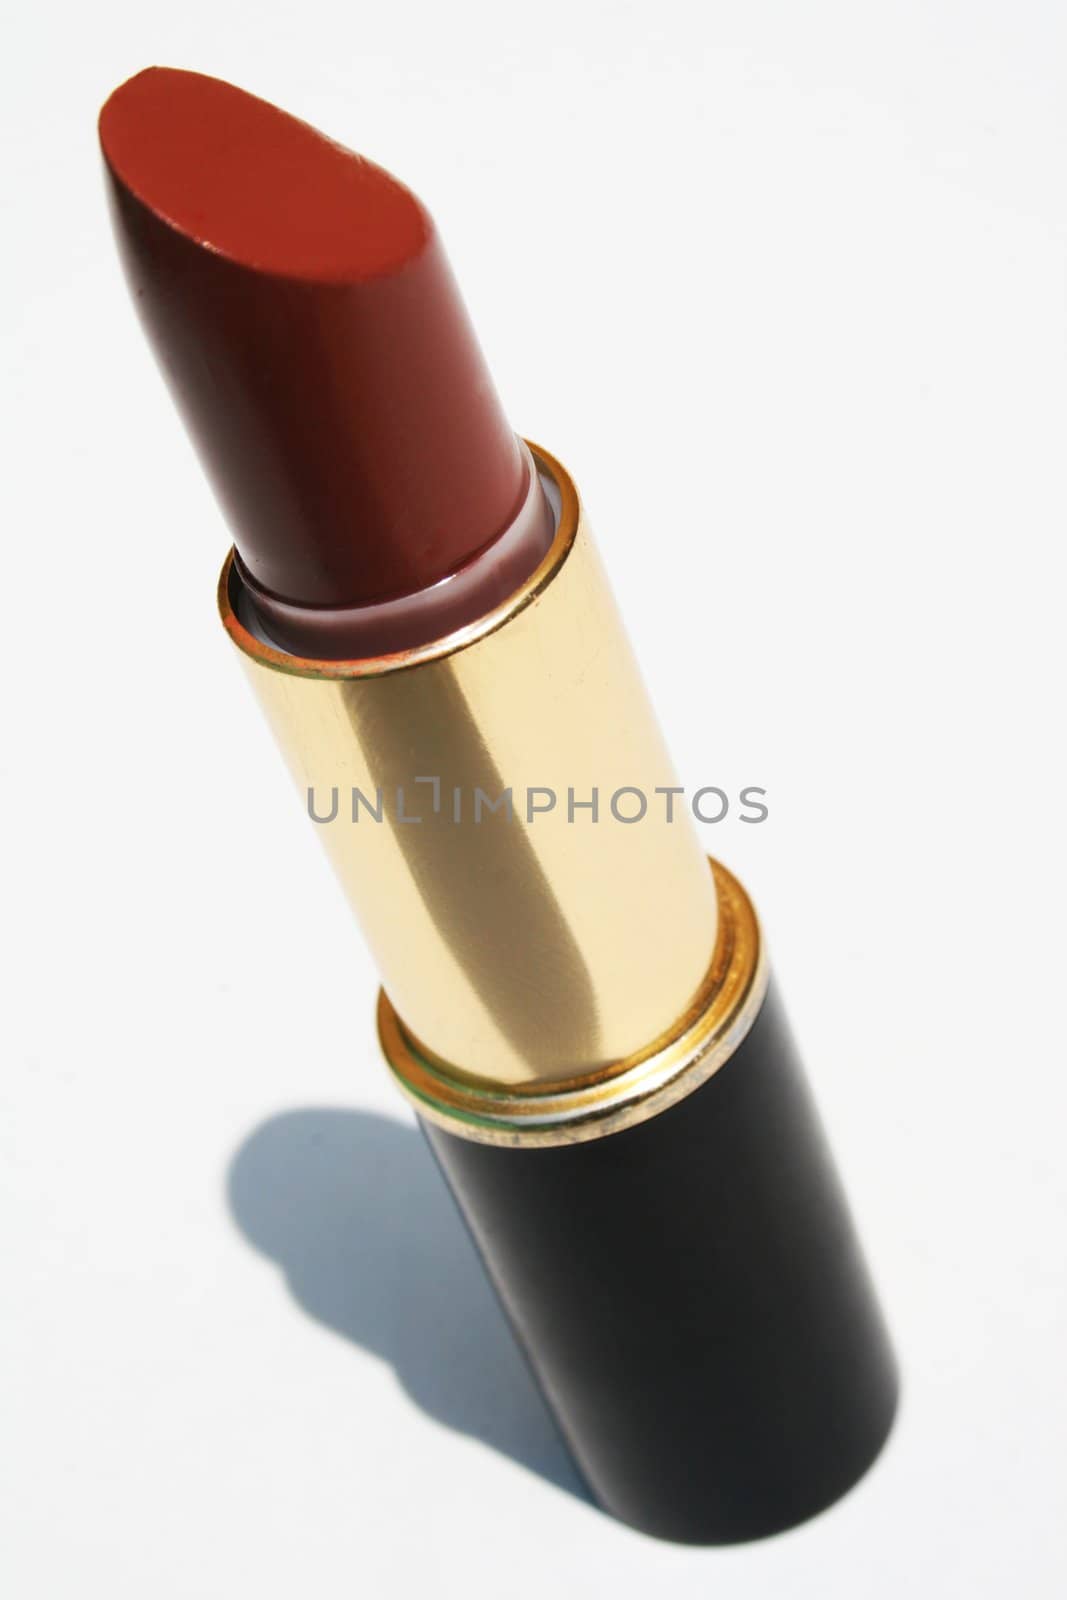 Tube of maroon lipstick against white background